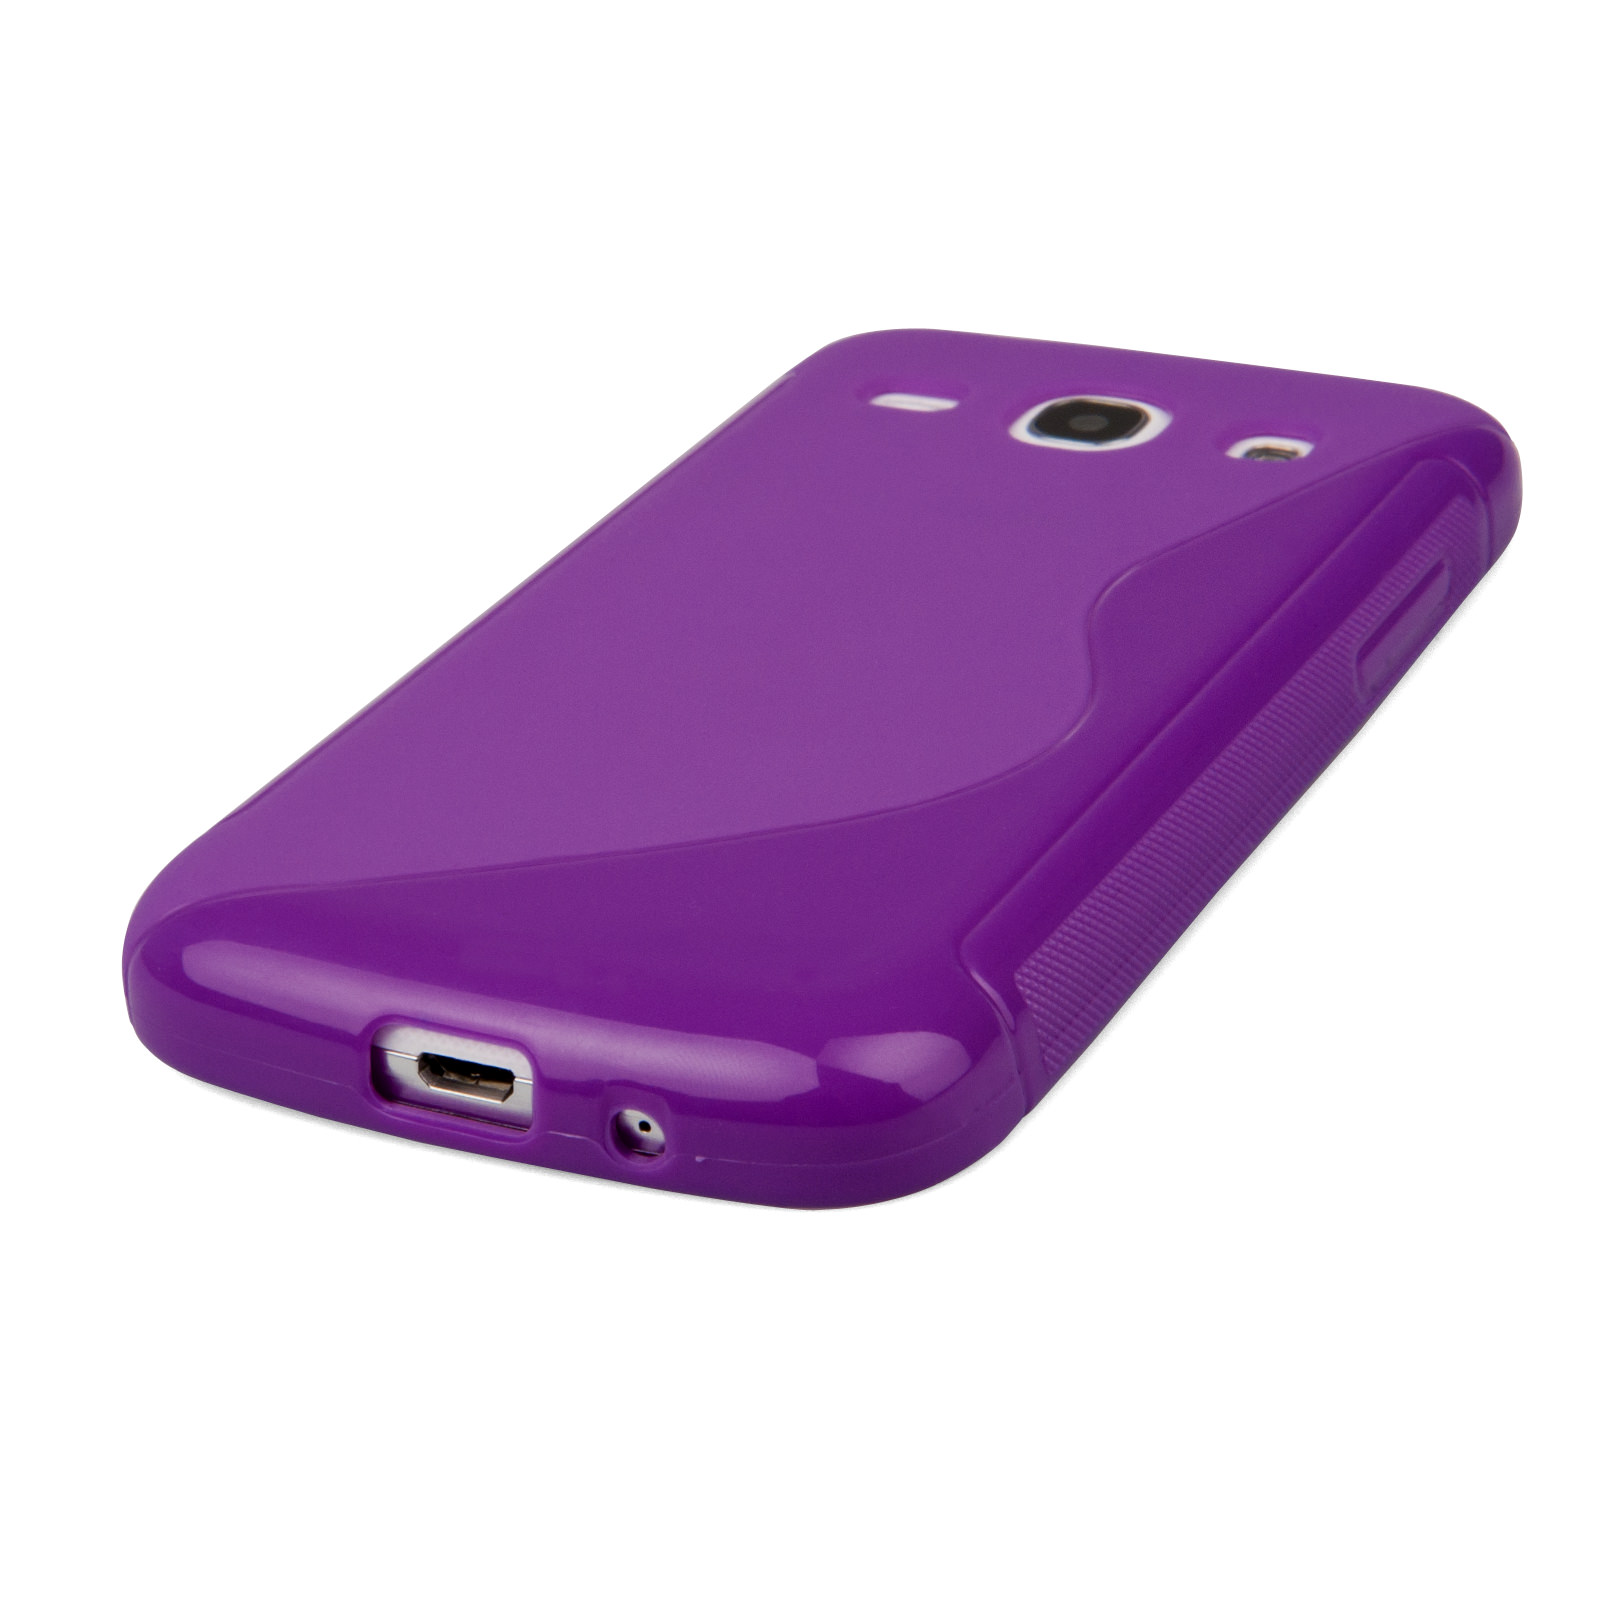 Caseflex Samsung Galaxy Core Plus Silicone Gel S-Line Case - Purple